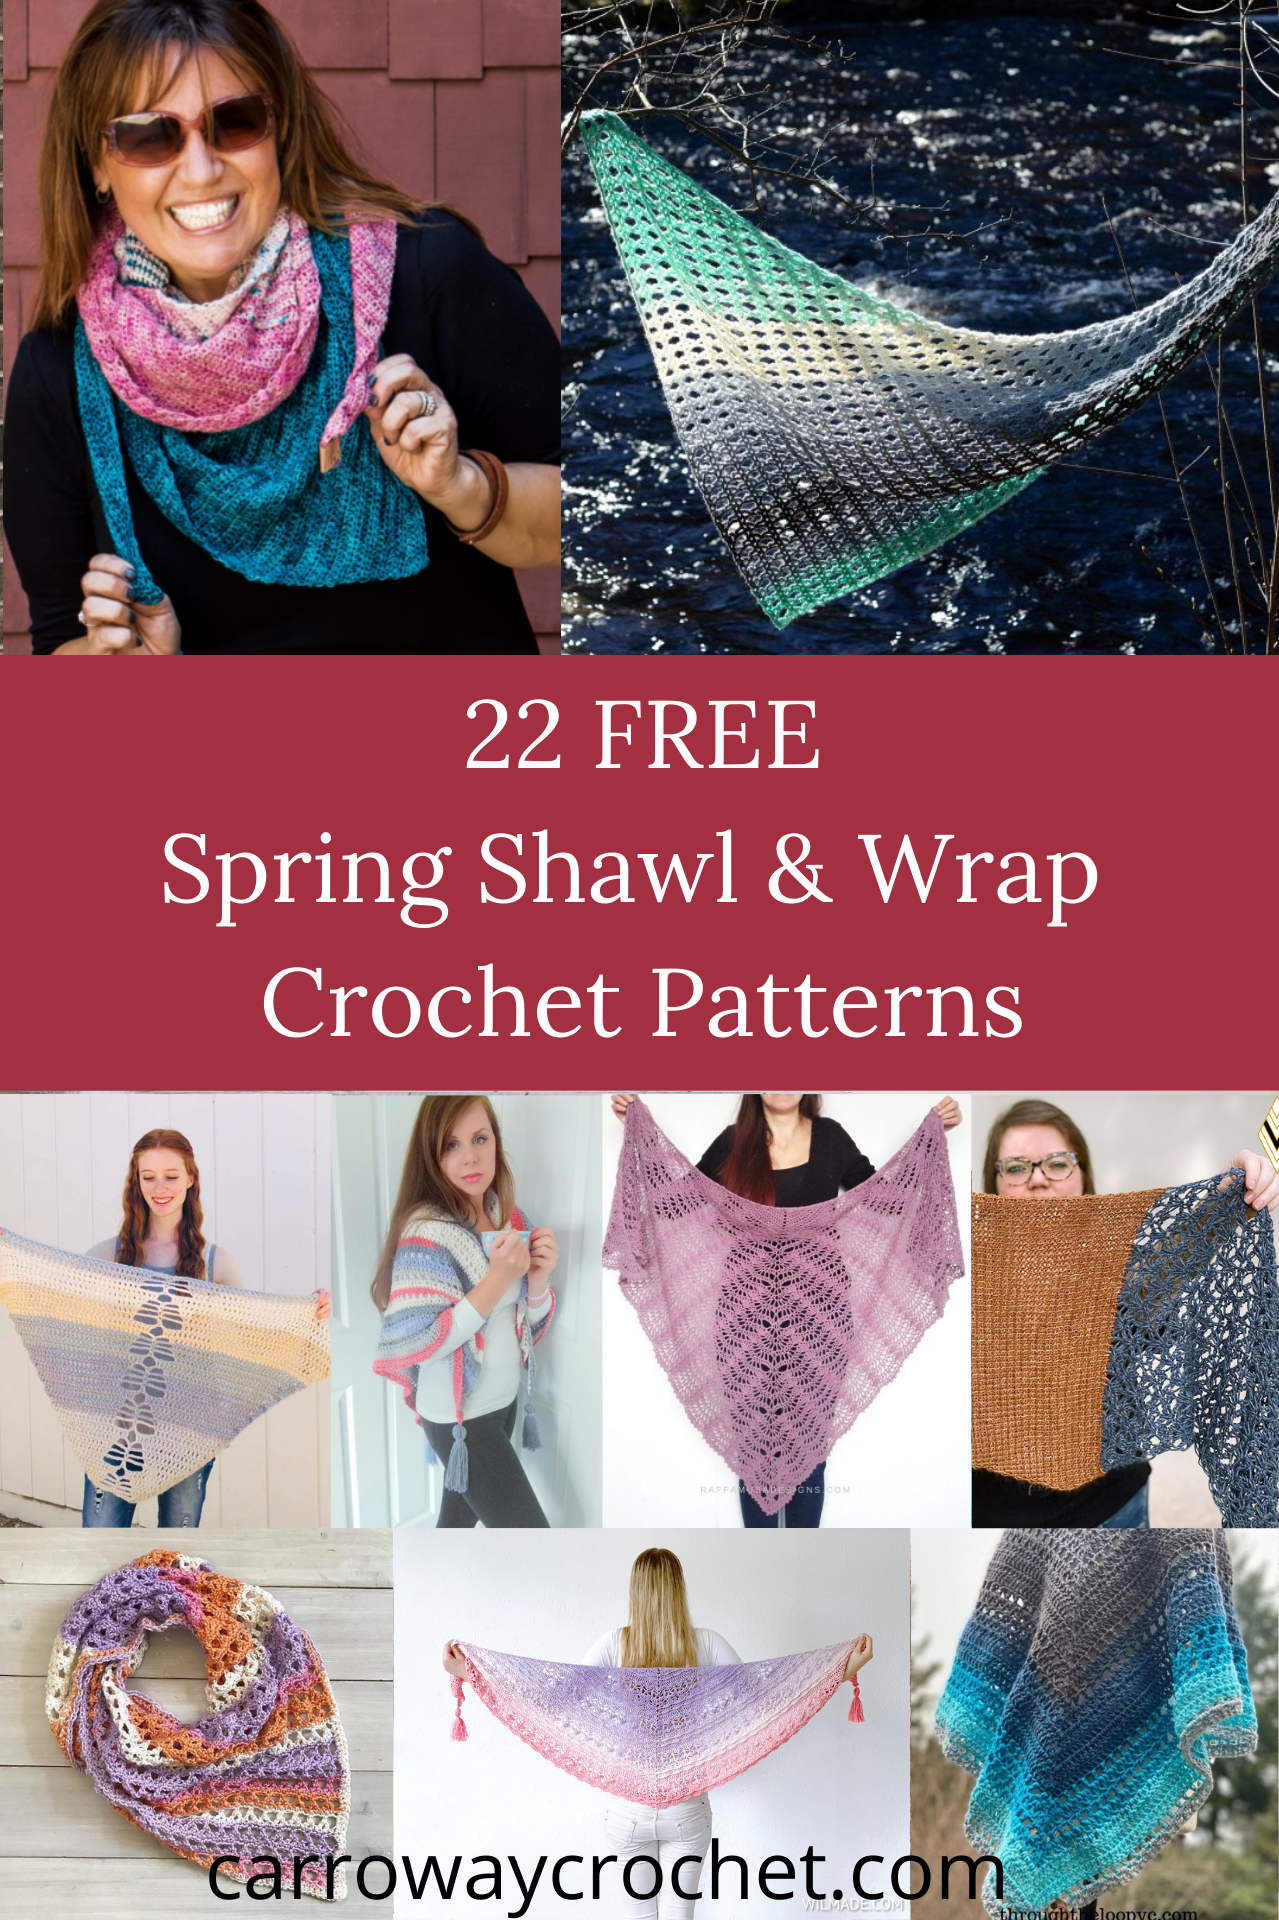 It's a Wrap - Shawl Crochet Pattern Book so far